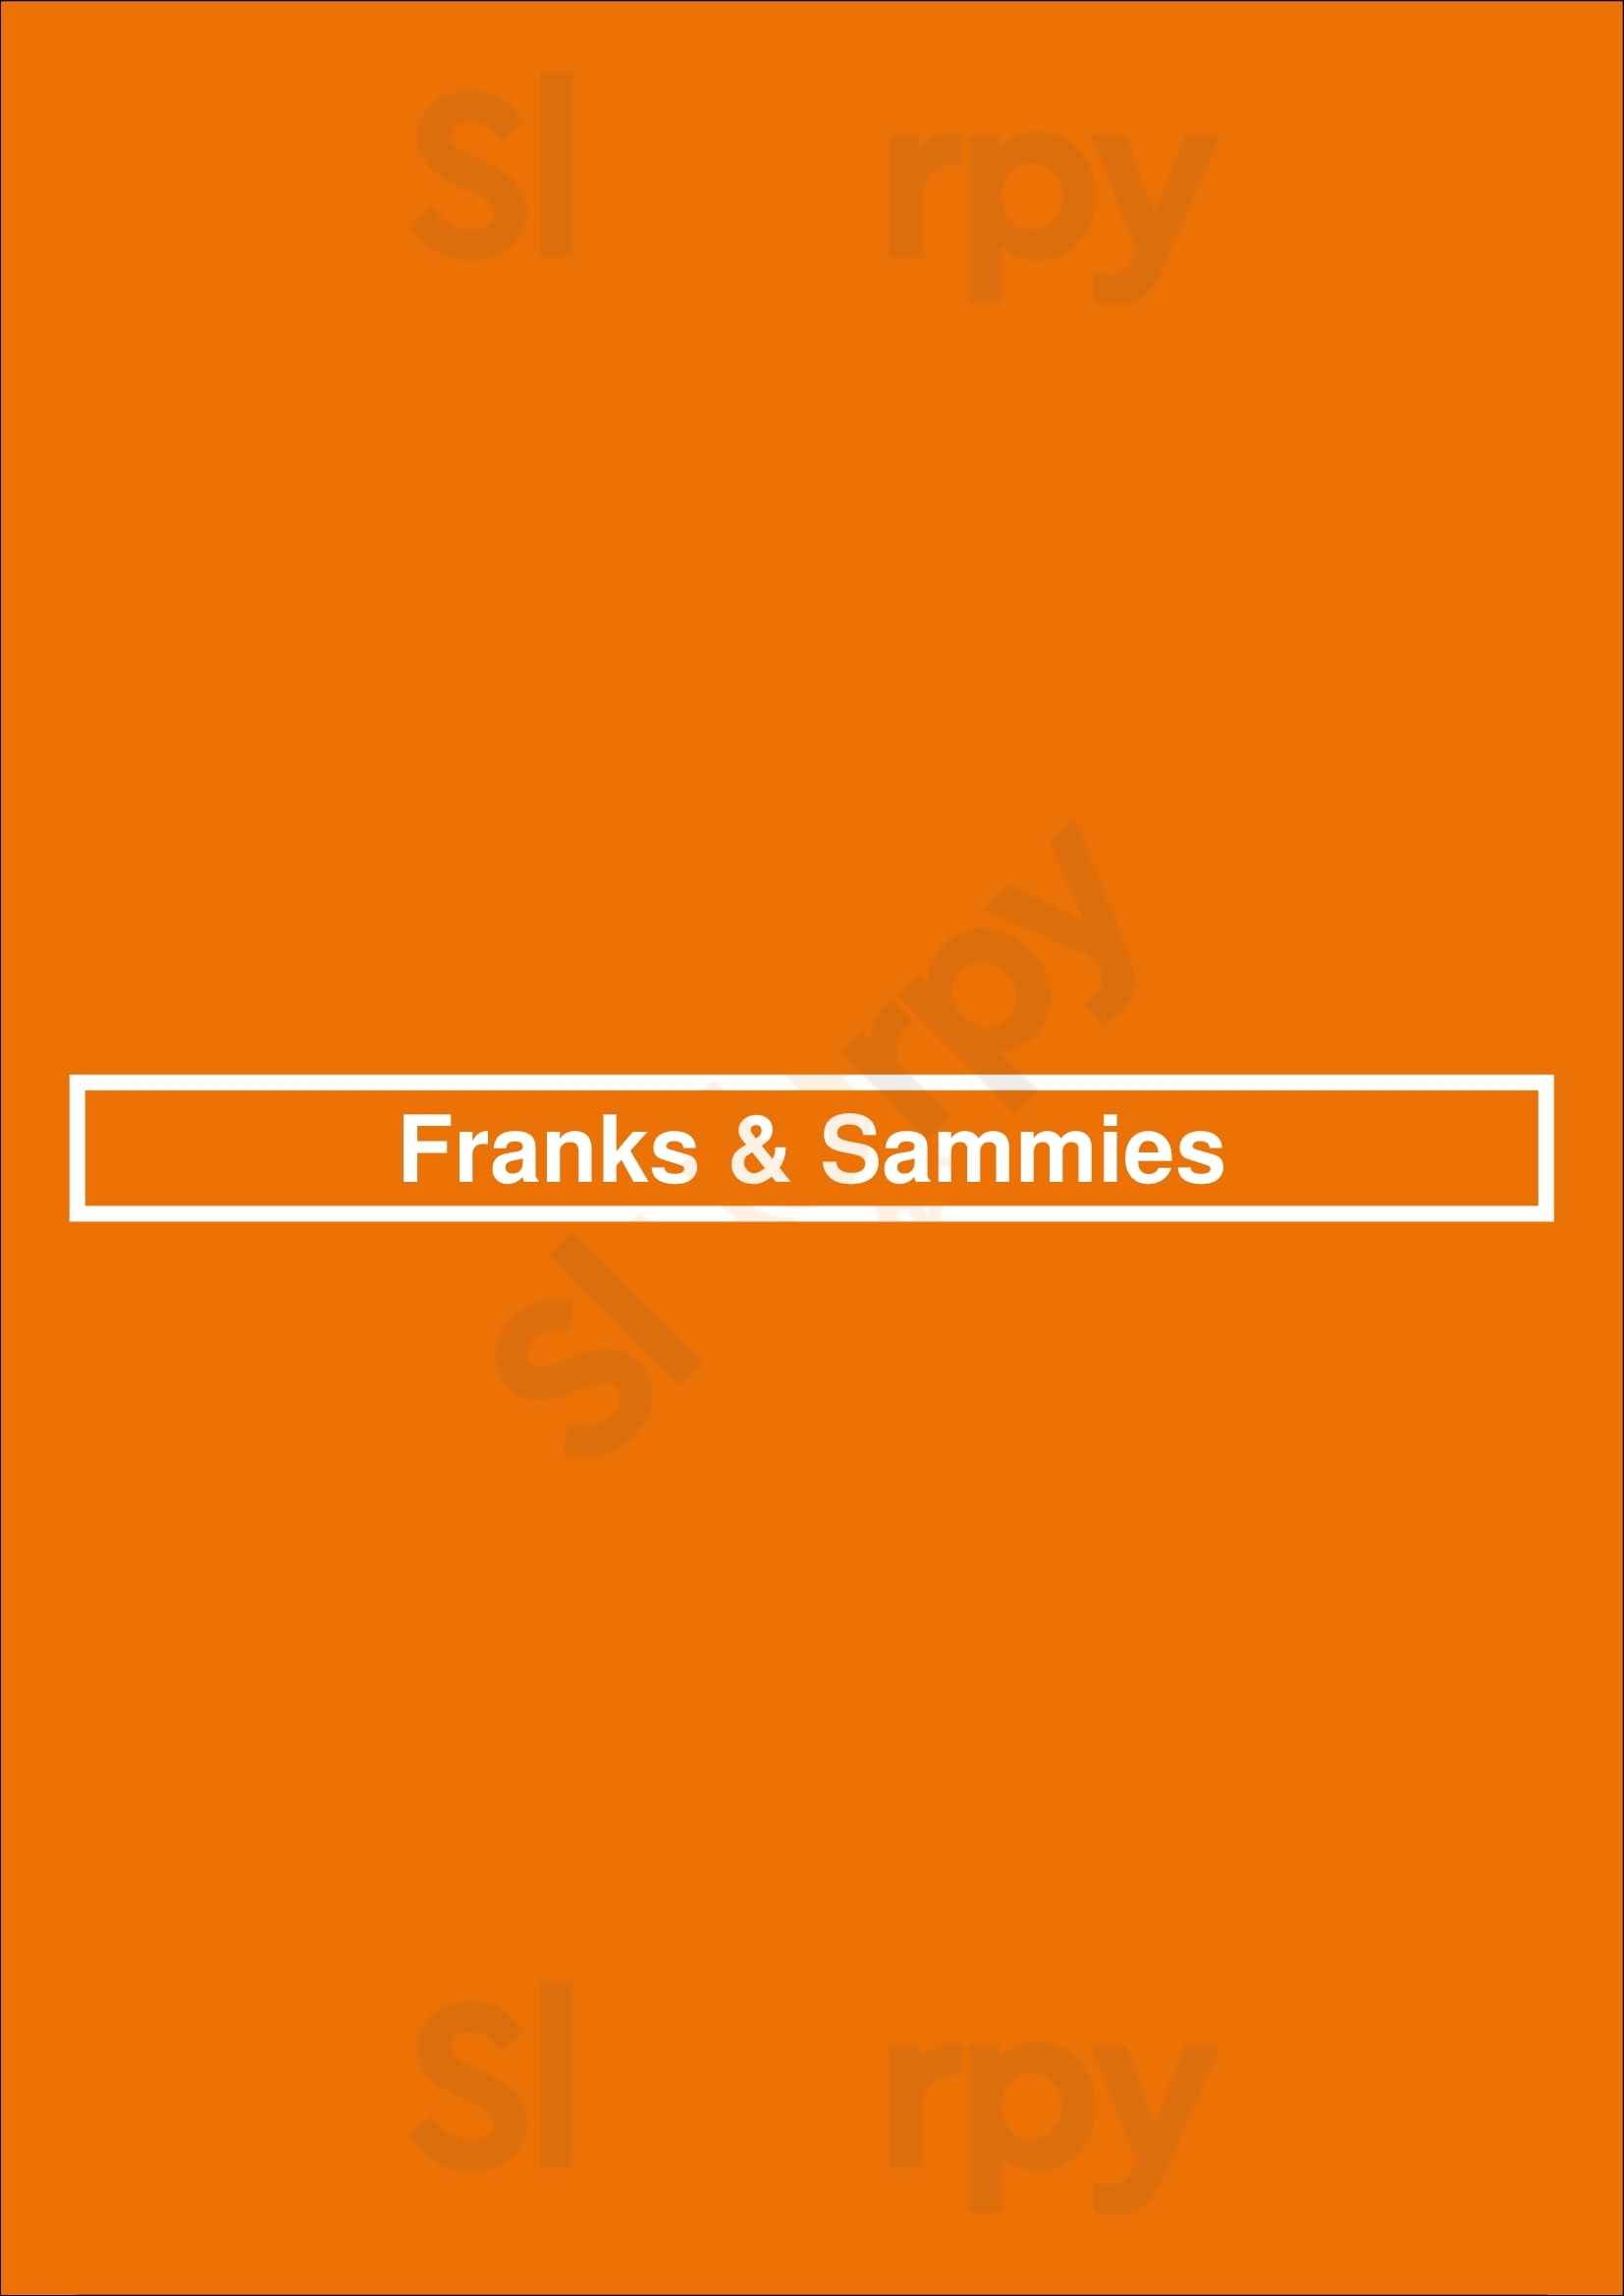 Franks & Sammies Newark Menu - 1